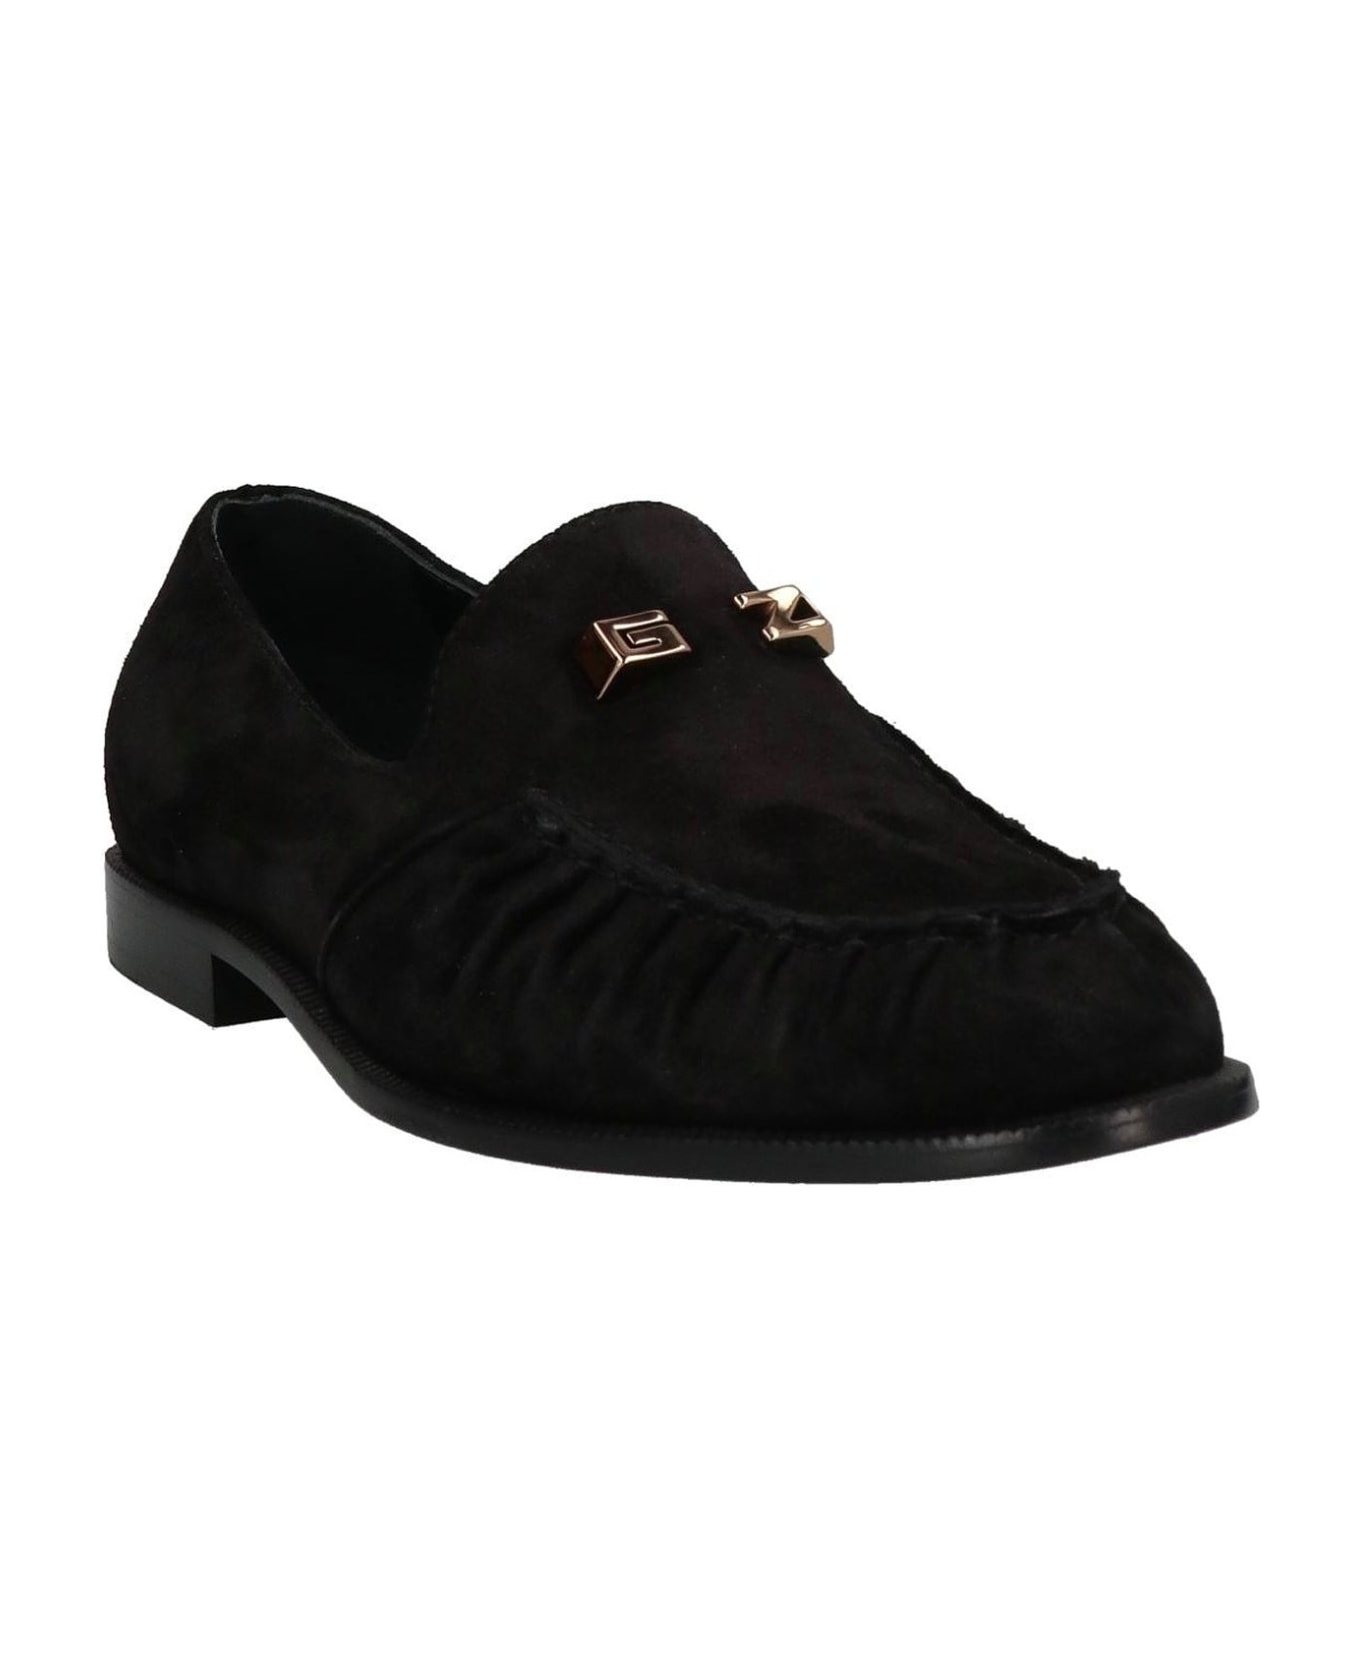 Giuseppe Zanotti Leather Loafers - Black